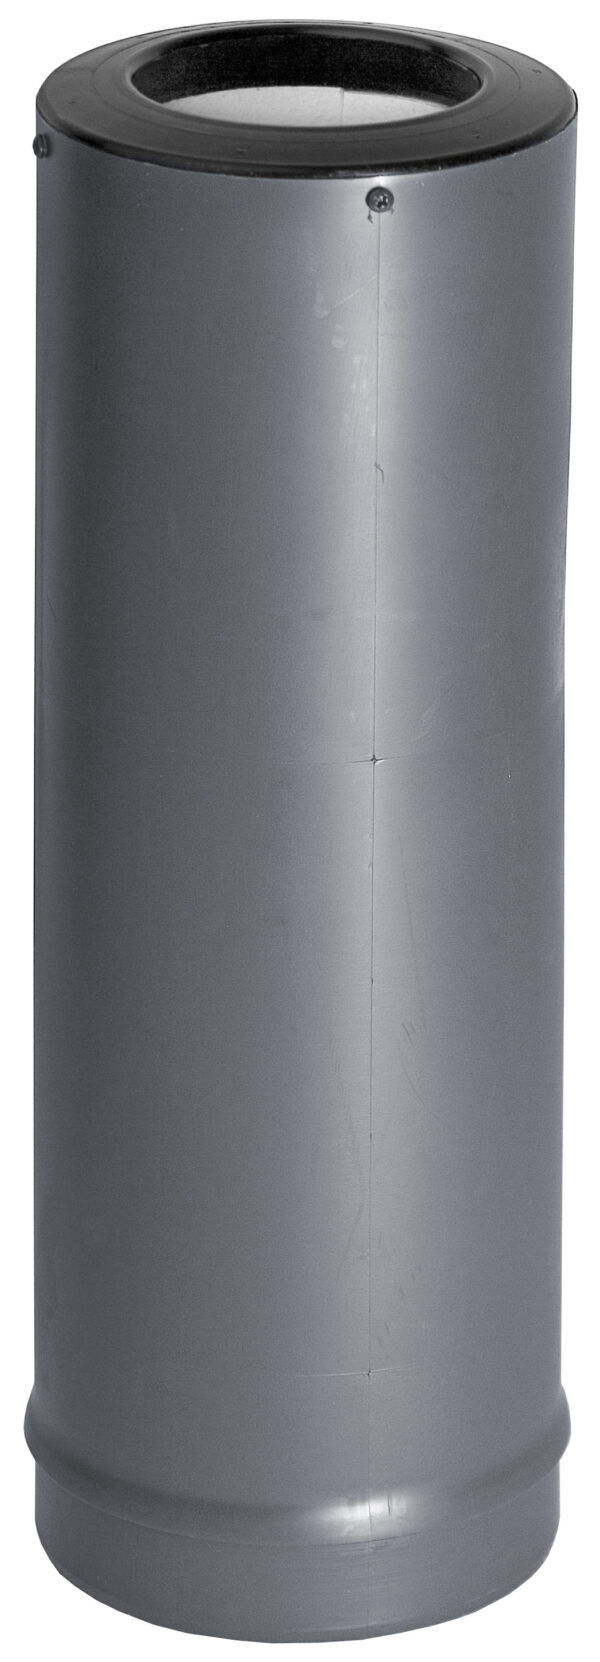 Изолирующий кожух -110 Vilpe для теплоизоляции вентиляционного выхода Ø 110 мм 4